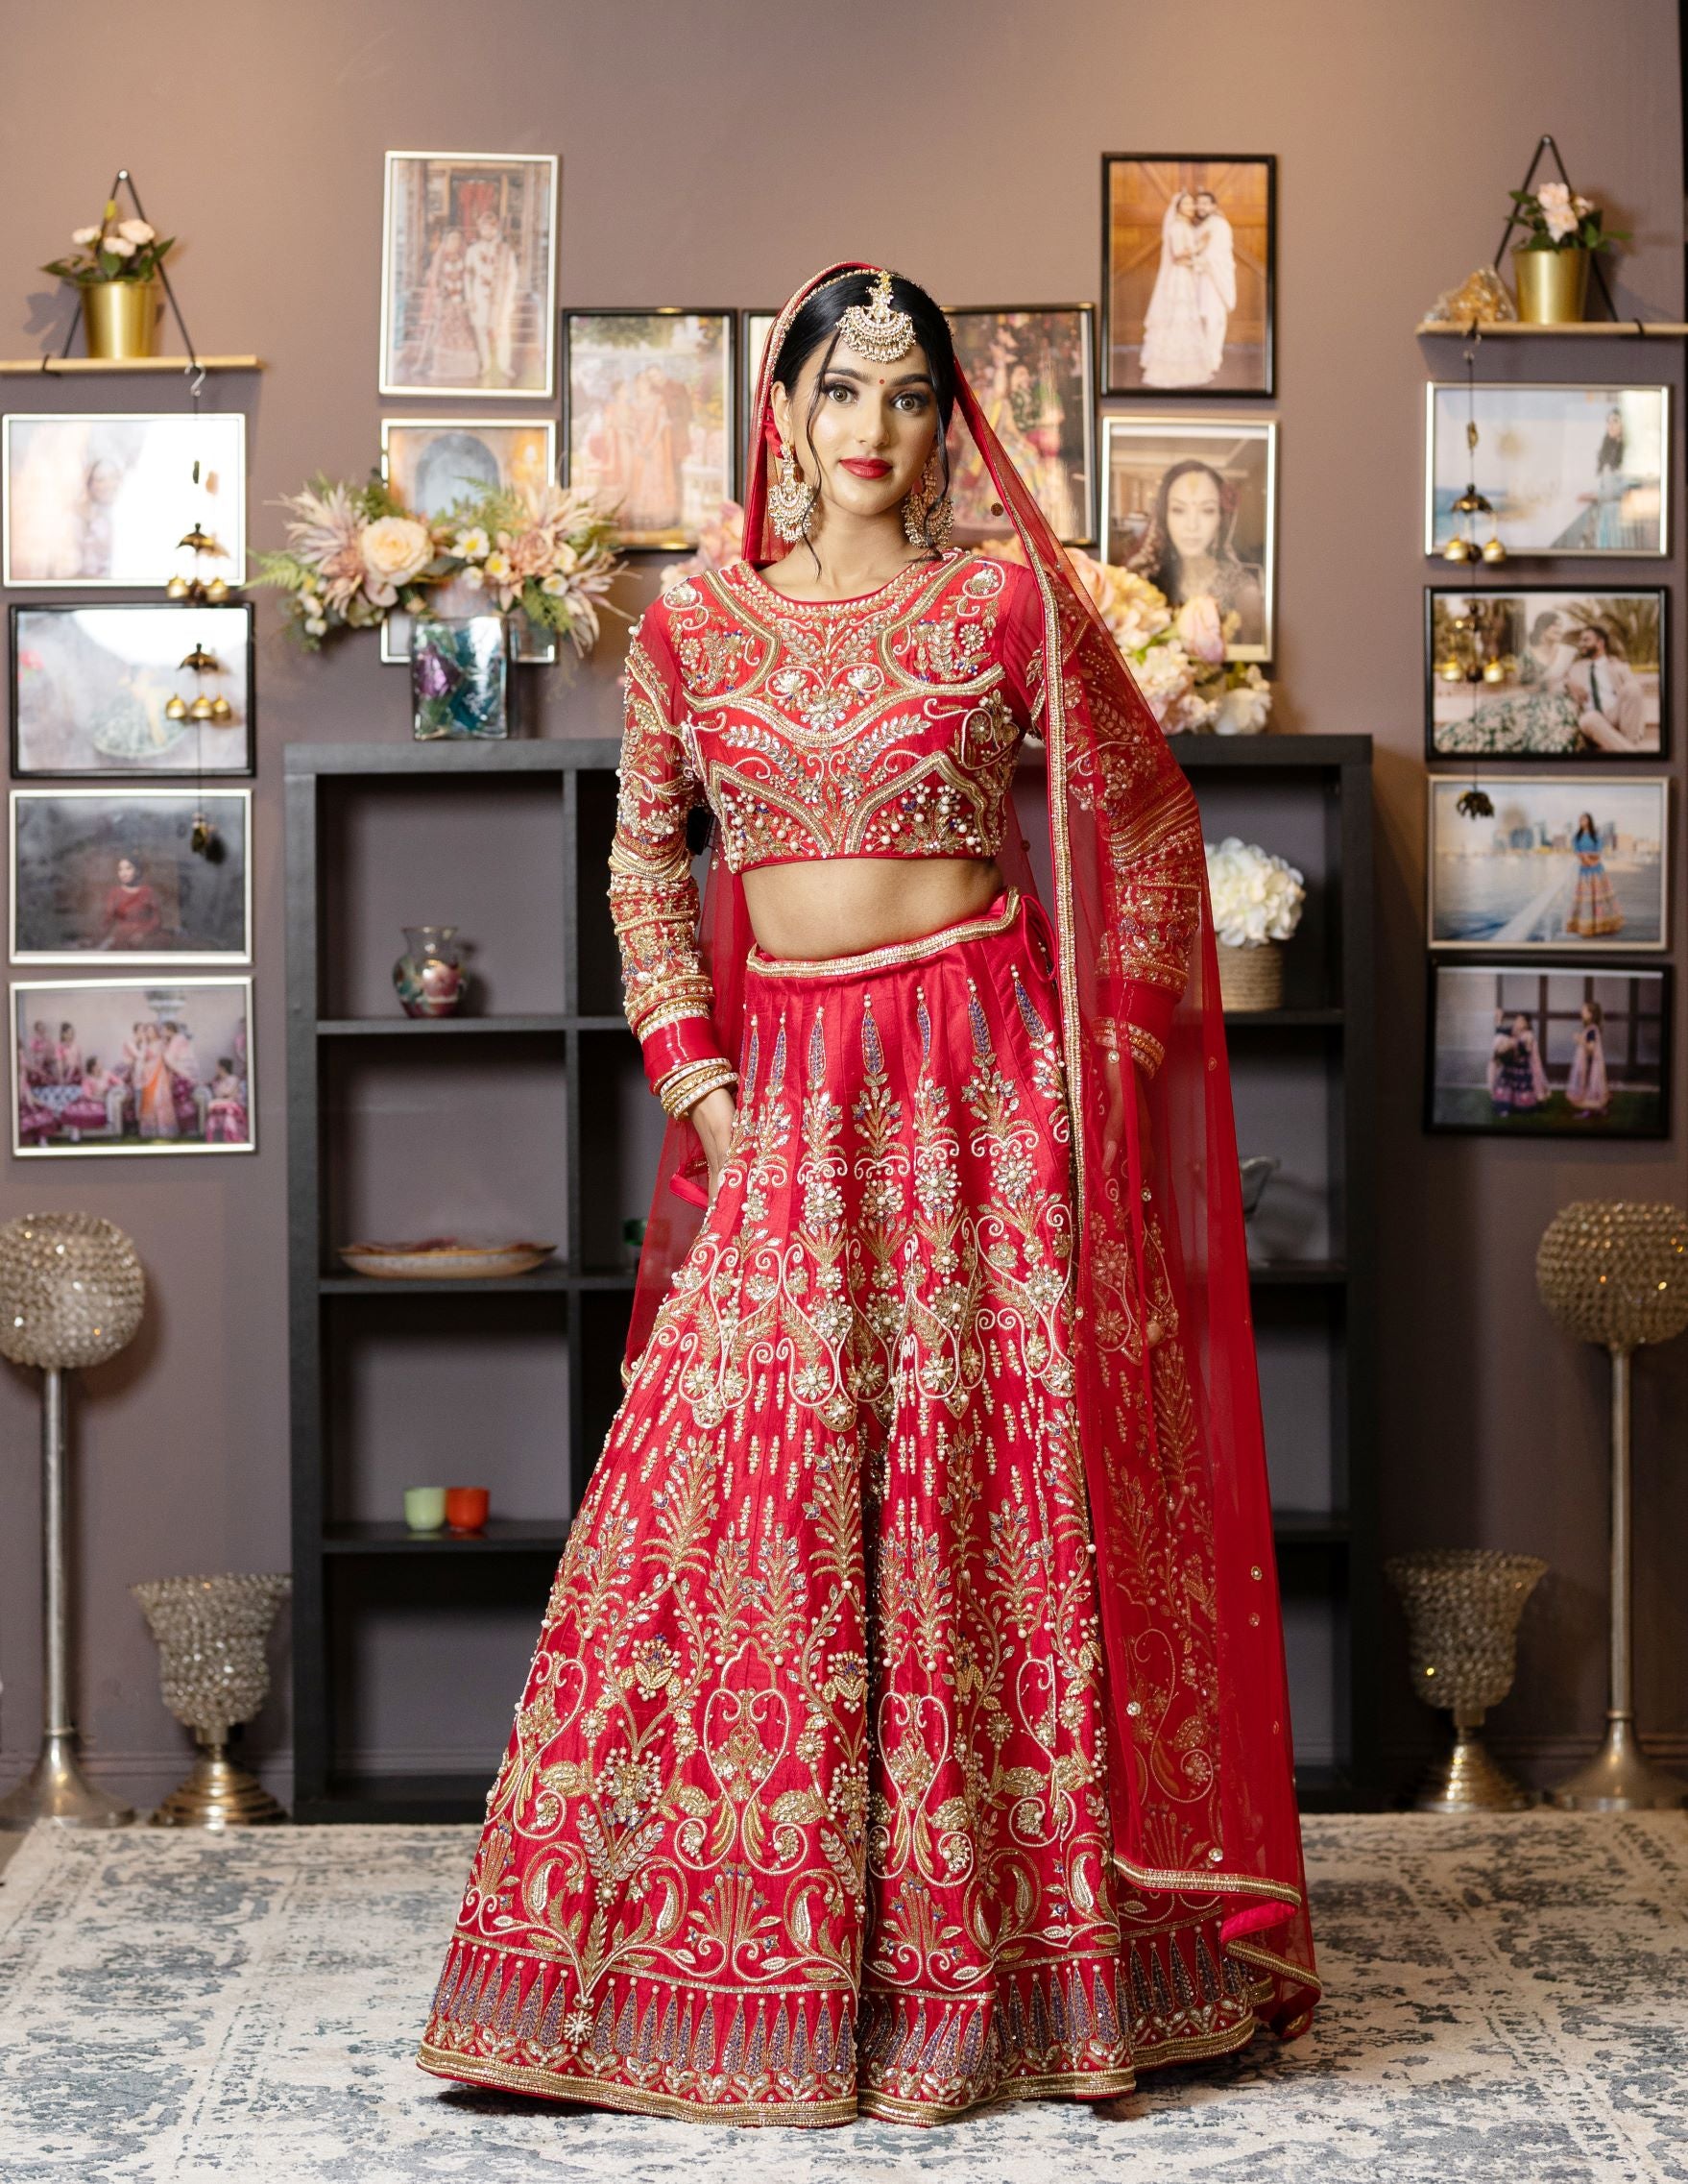 New and Preloved Wedding Dresses For Sale: Buy 100% Original Pakistani  Bridal Dresses Used formal Wear